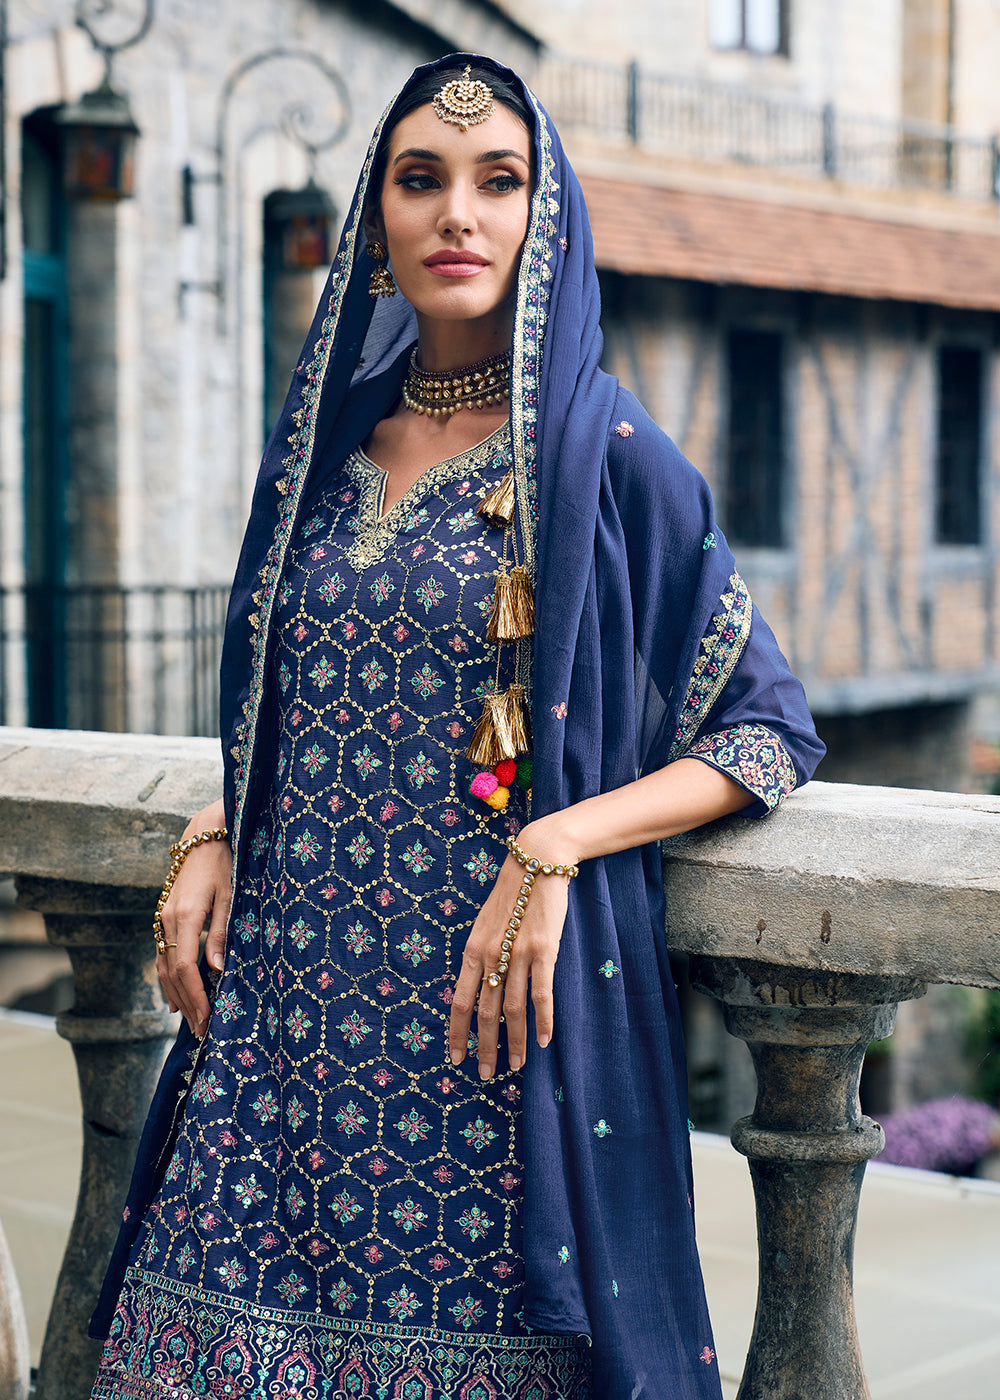 Buy Now Punjabi Style Blue Embroidered Designer Palazzo Suit Online in USA, UK, Canada, Germany, Australia & Worldwide at Empress Clothing.